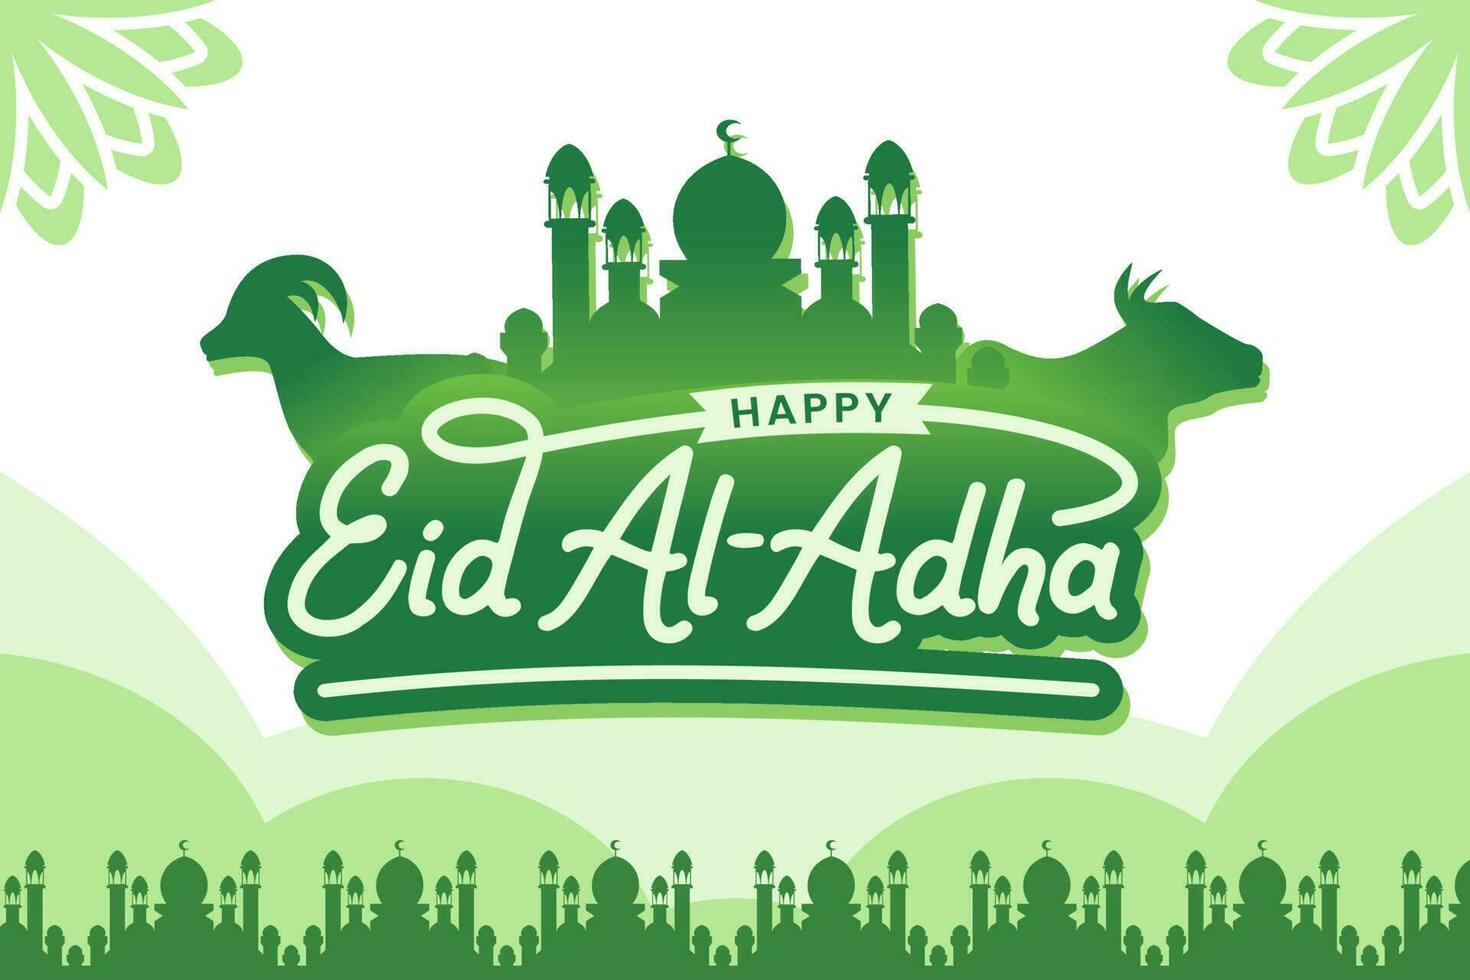 eid al Adha islamic typografi och illustration vektor